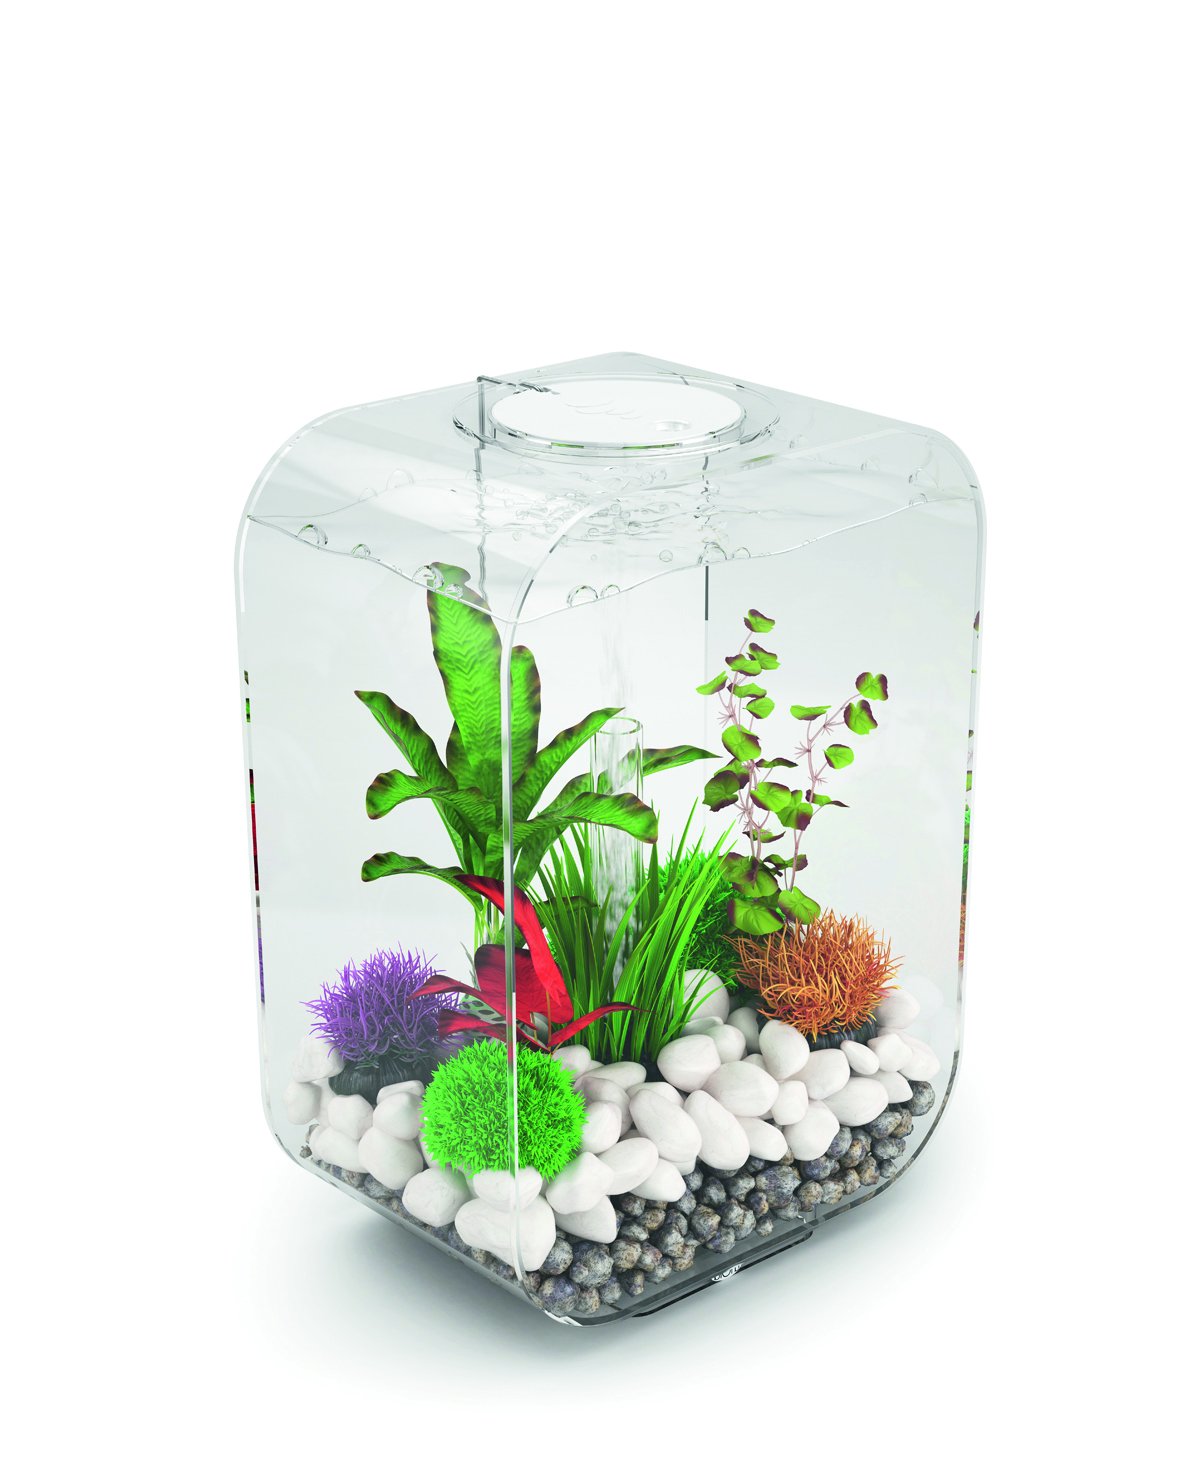 biOrb LIFE 15 LED Aquarium, 15 Liter - Aquarien Komplett-Set mit LED Beleuchtung und patentiertem Filter-System, Acryl-Becken